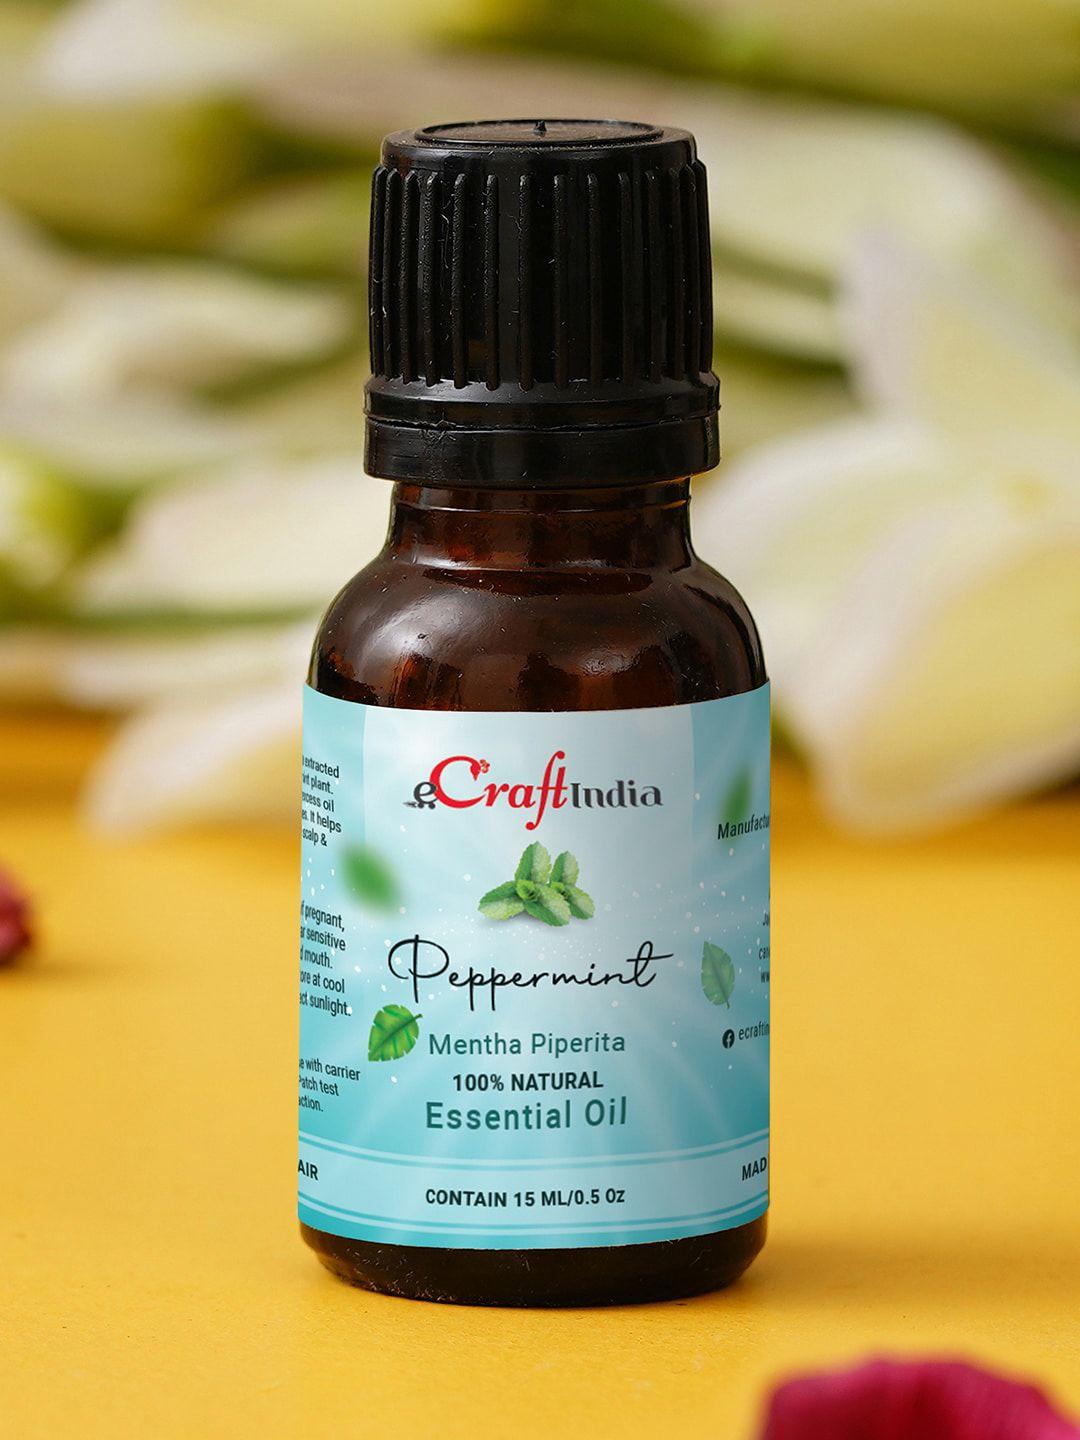 ecraftindia mint 100% natural essential oil for skin & hair - 15 ml